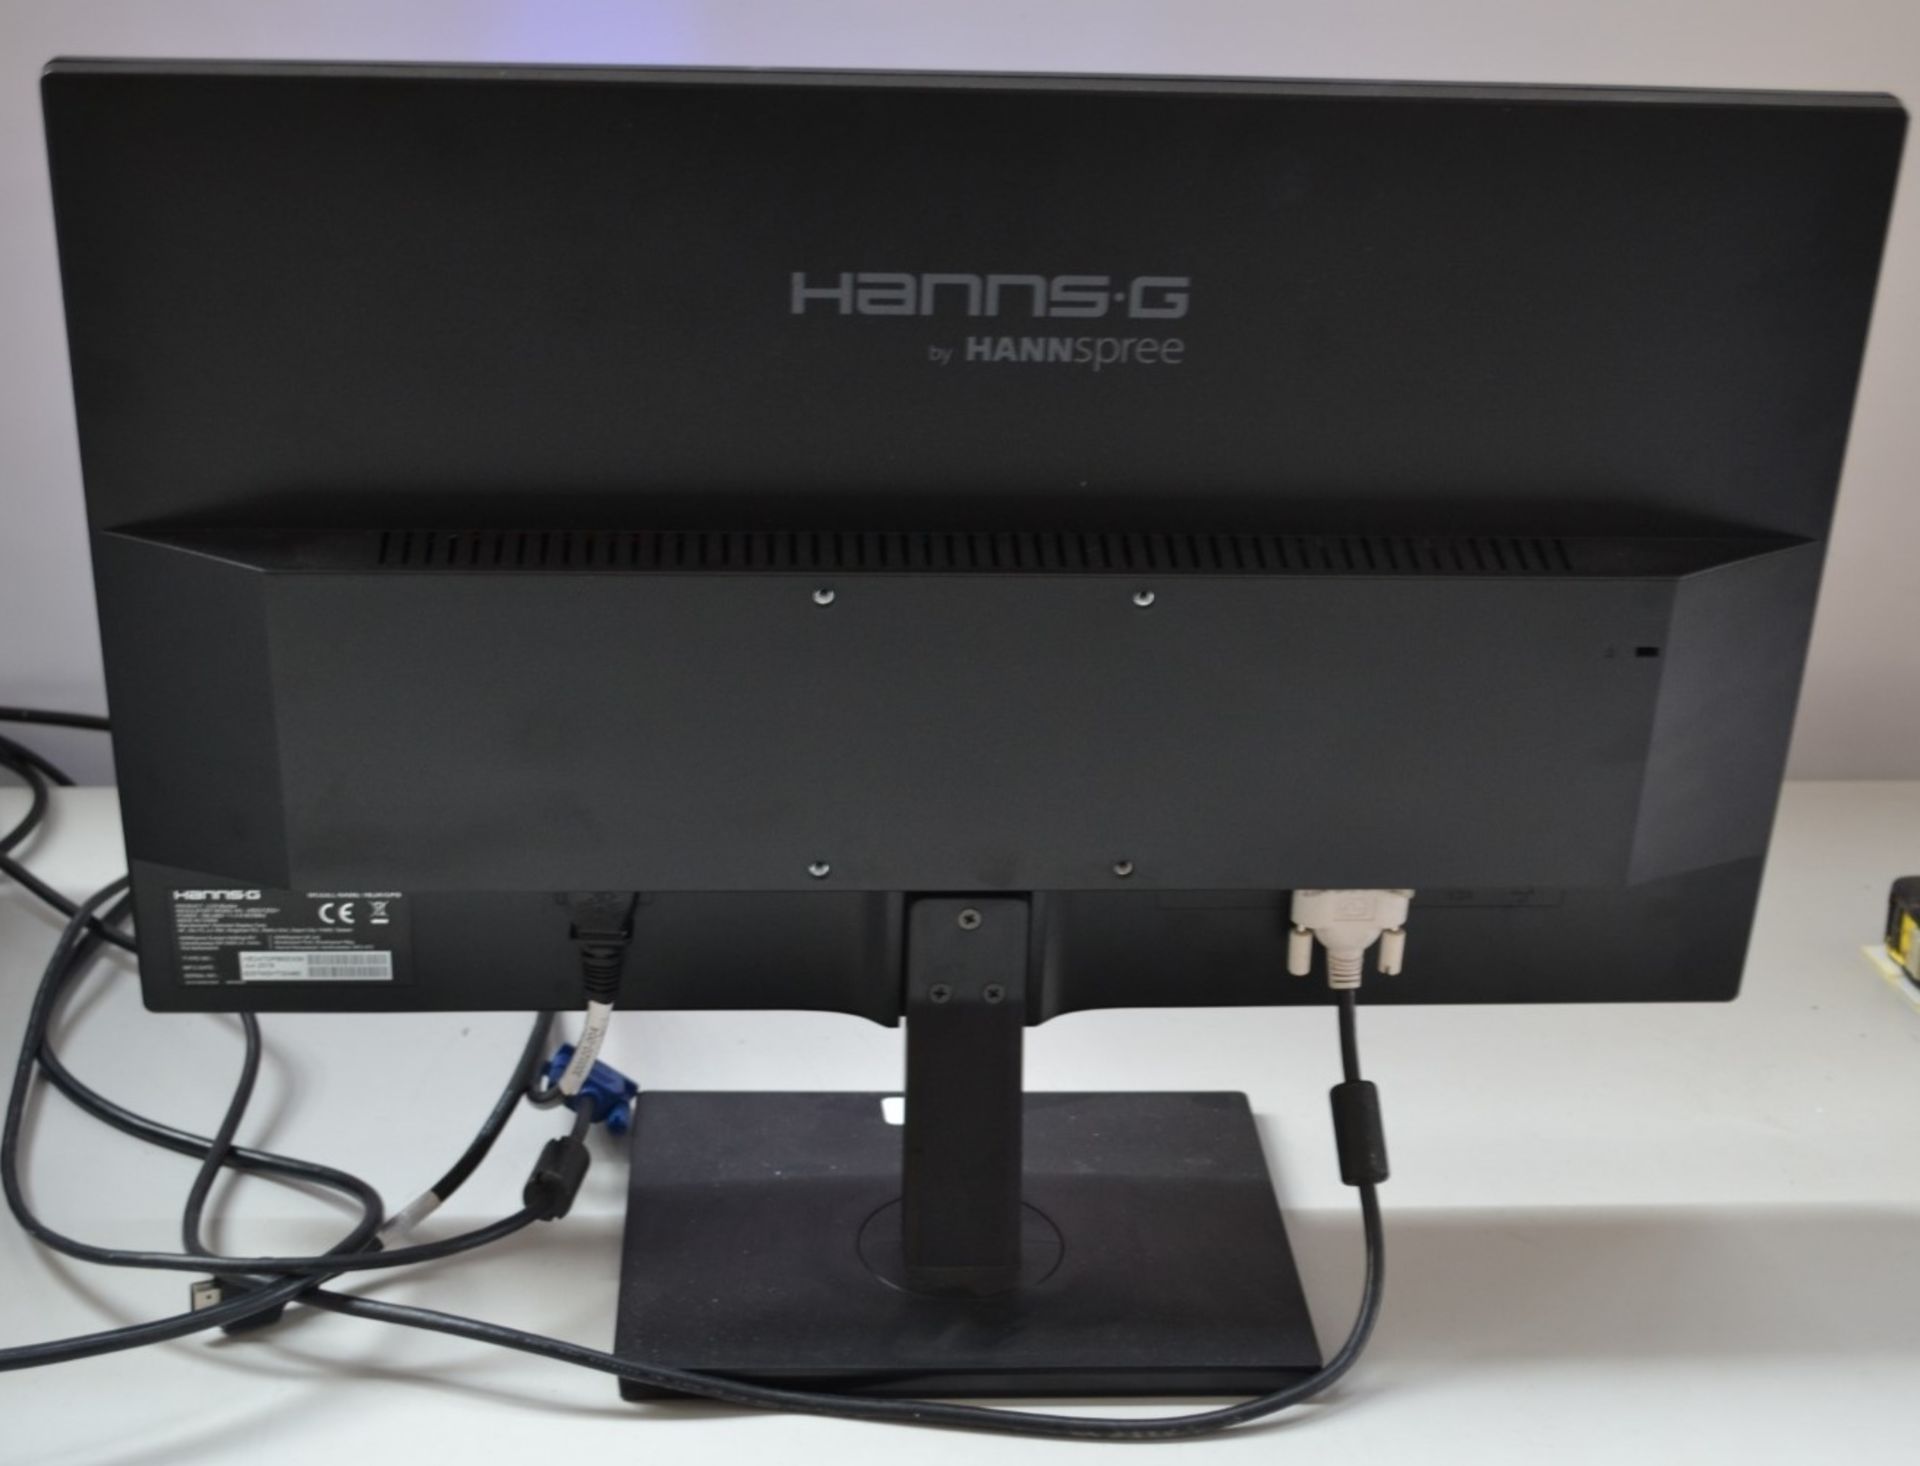 1 x HannsG HE247DPB 24" PC Monitor - Ref J2258 - Image 3 of 3